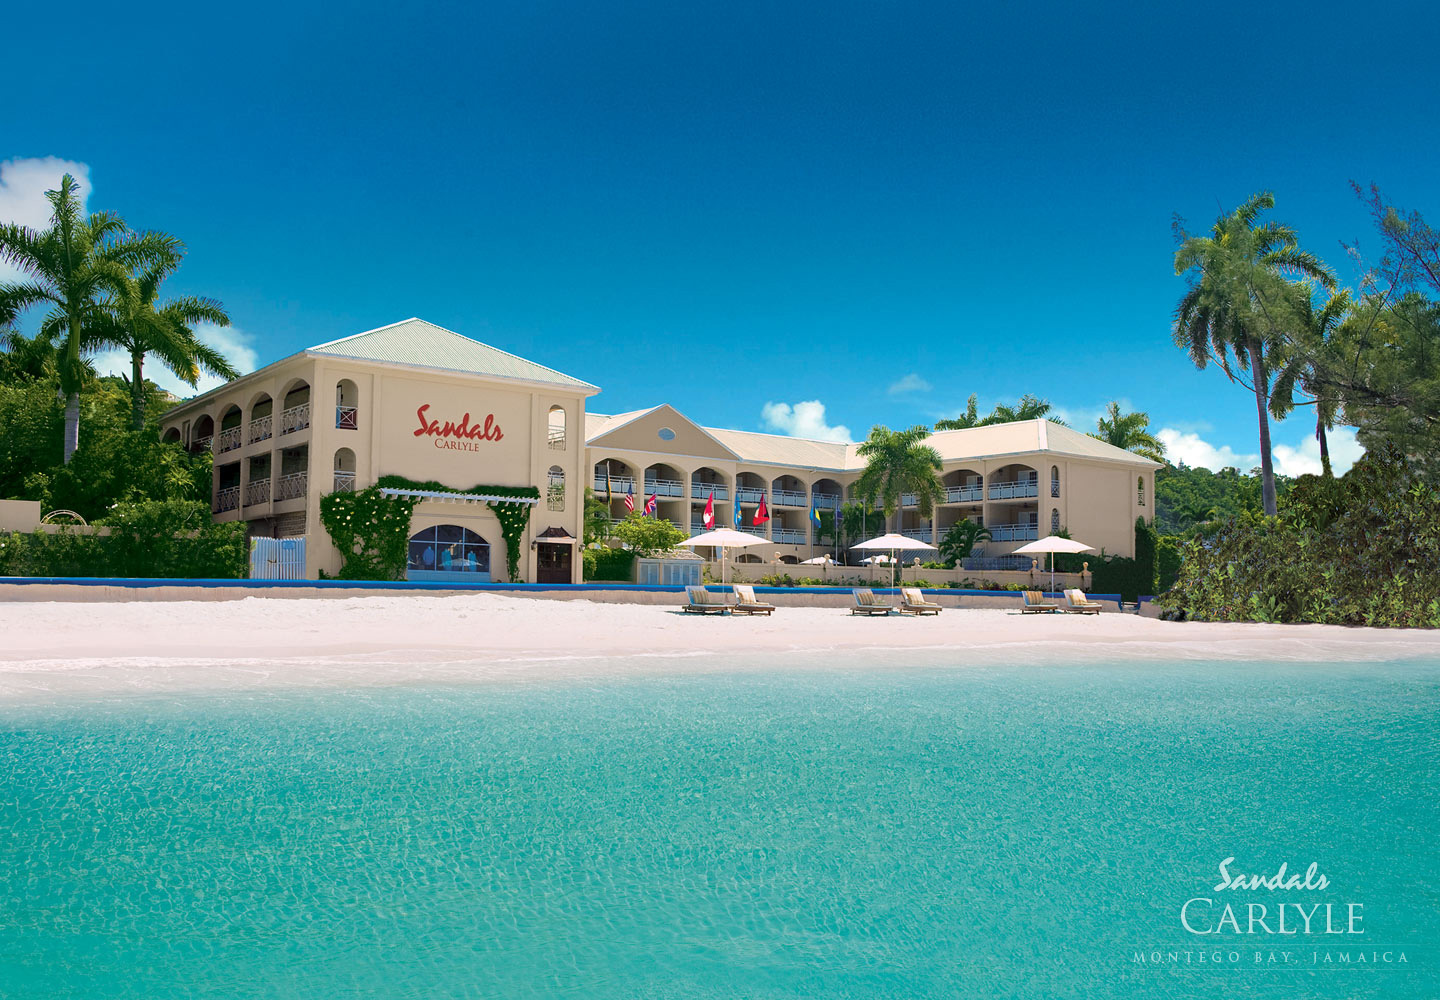 Sandals Carlyle Inn |Montego Bay, Jamaica